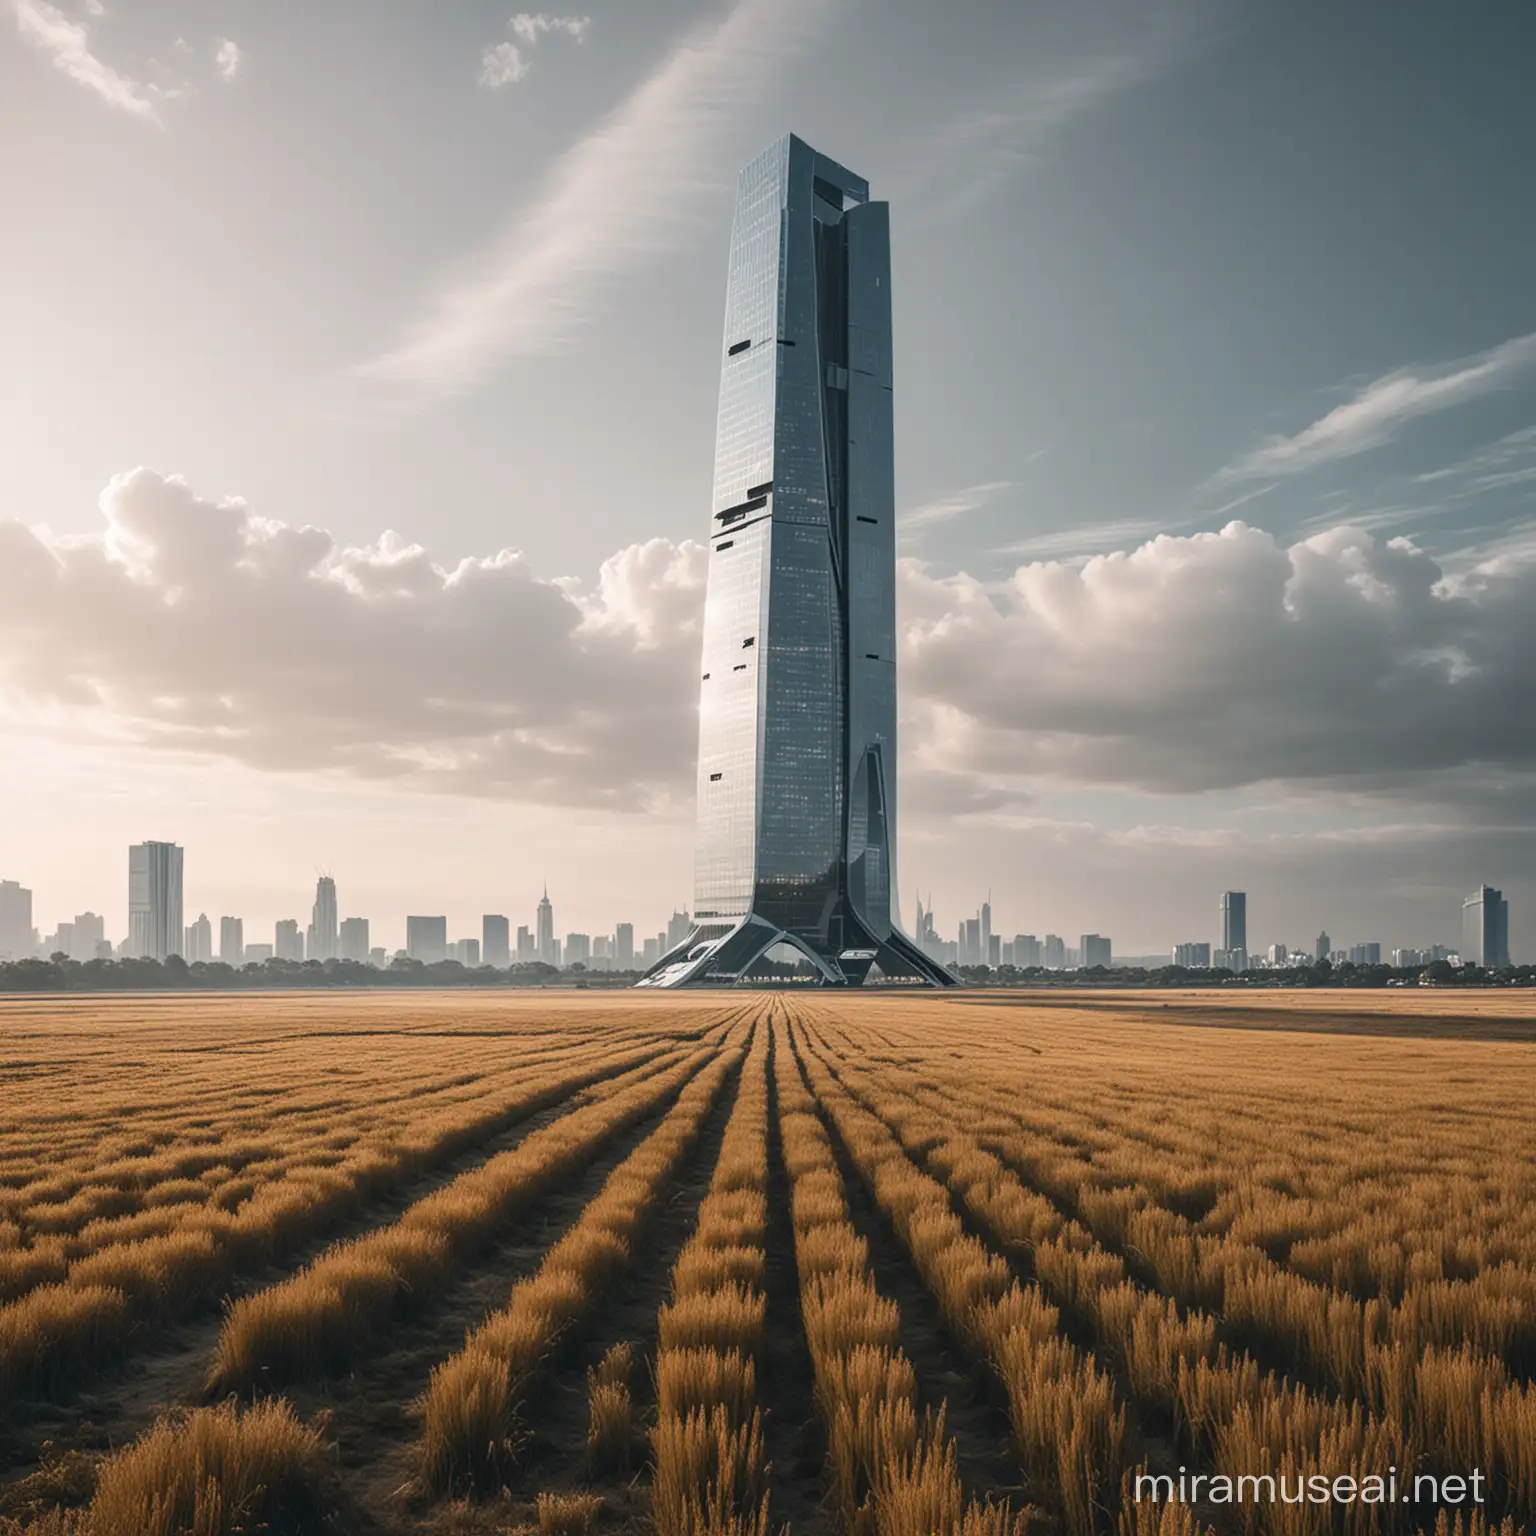 A futuristic skyscraper in a empty field